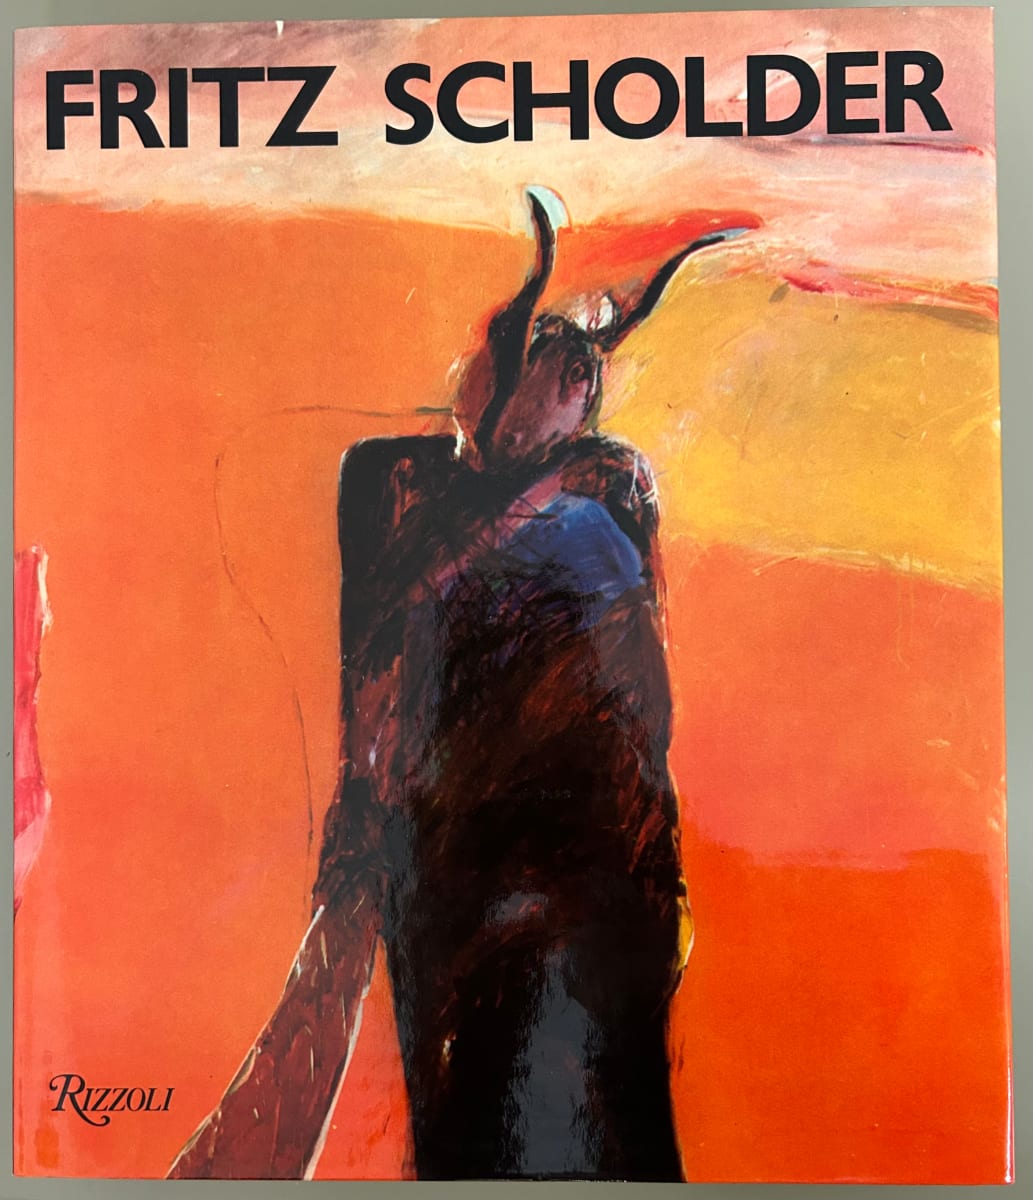 Fritz Scholder by Rizzoli 